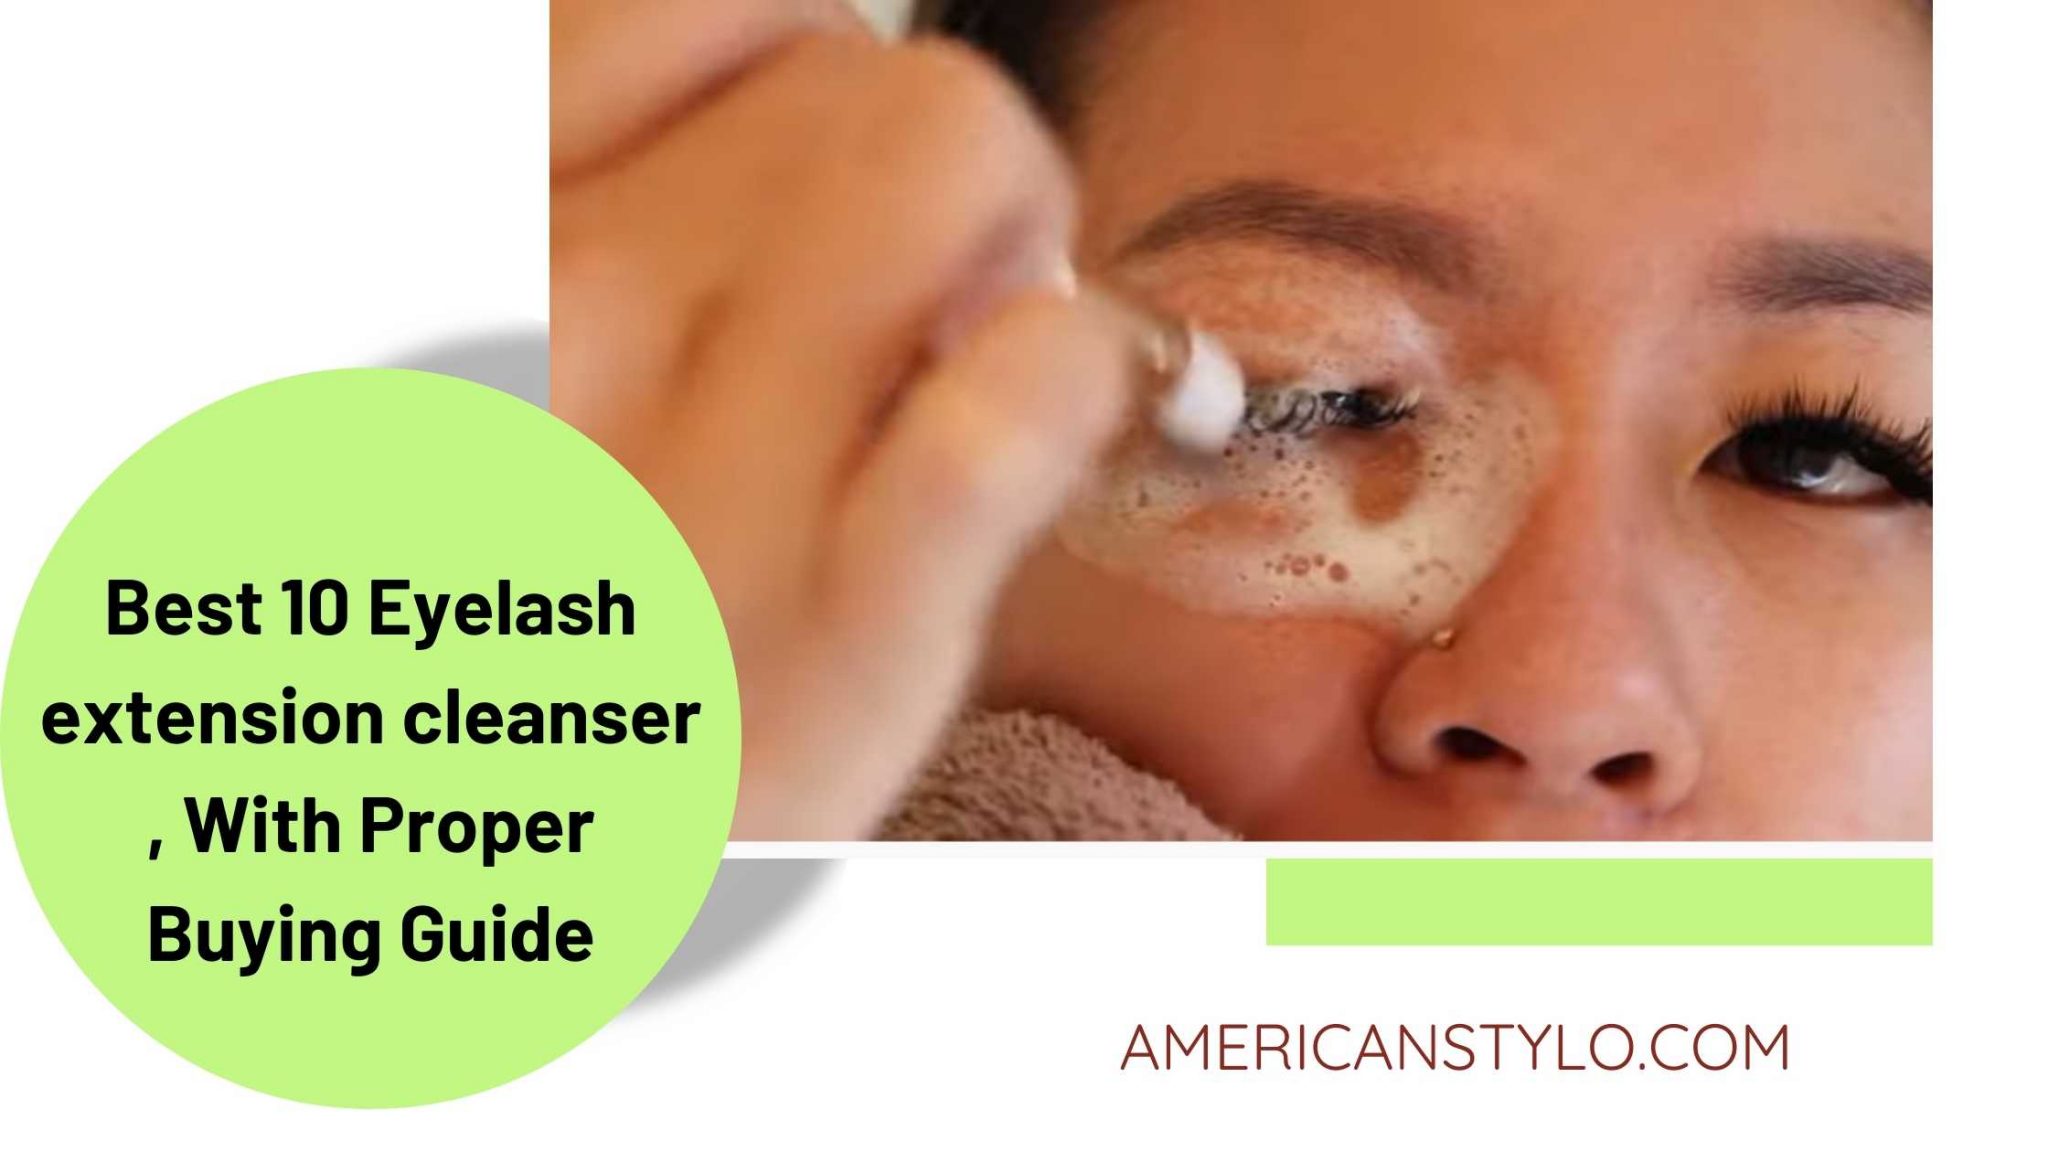 Best 10 Eyelash extension cleanser